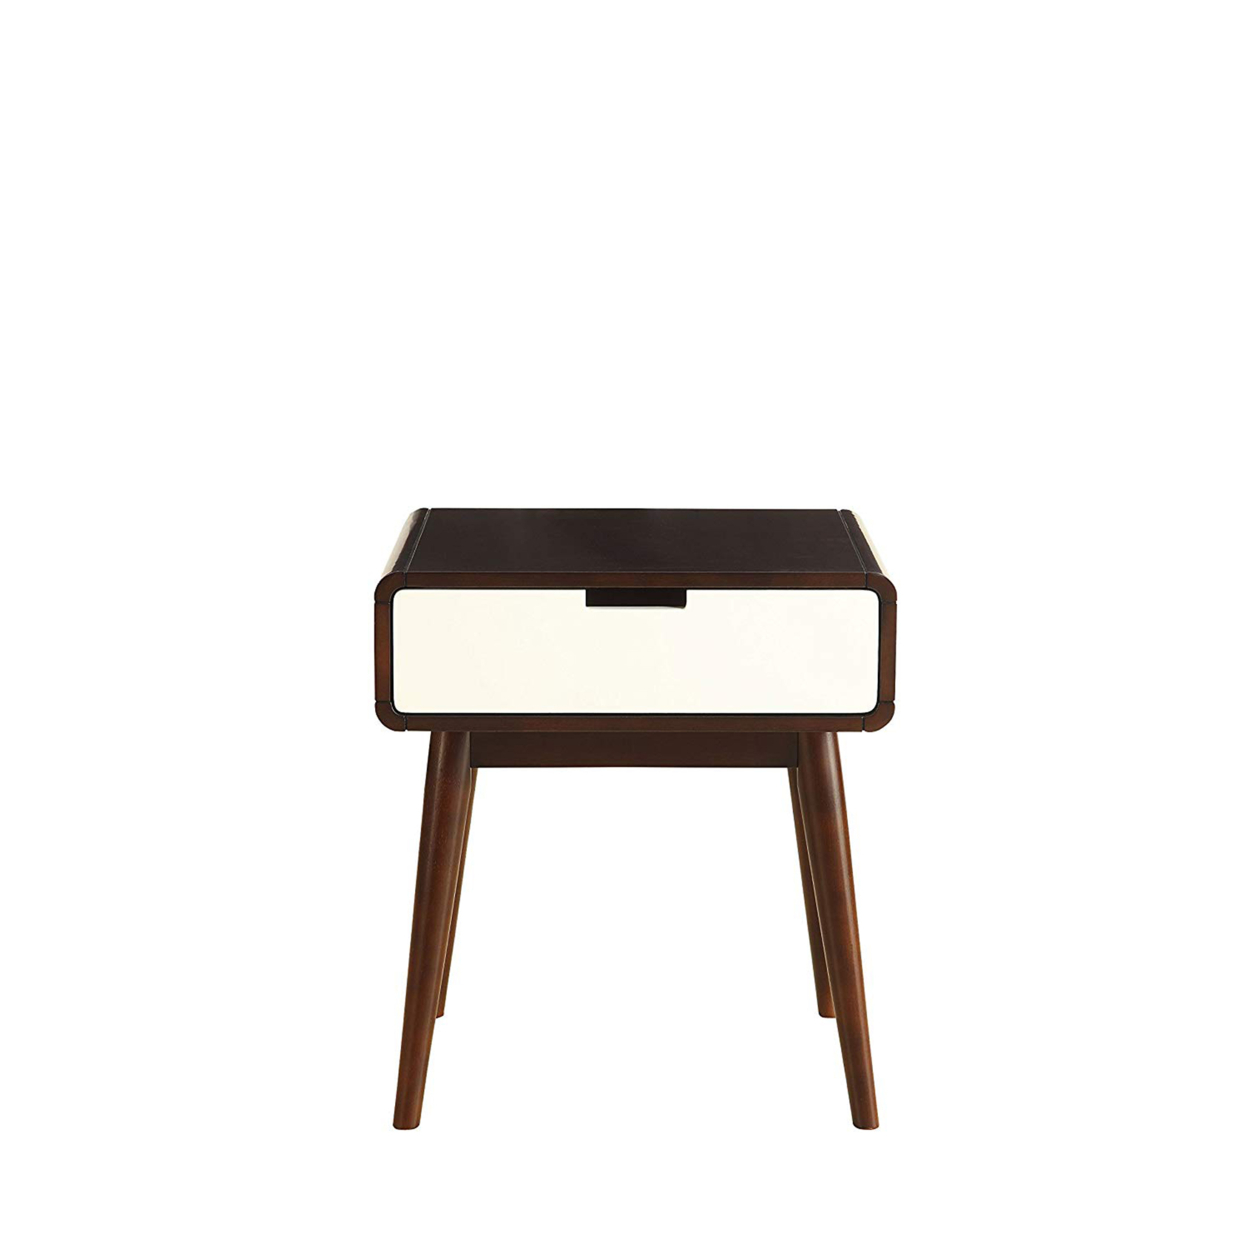 Christa End Table (USB Power Dock), Espresso and White- Saltoro Sherpi - image 2 of 6